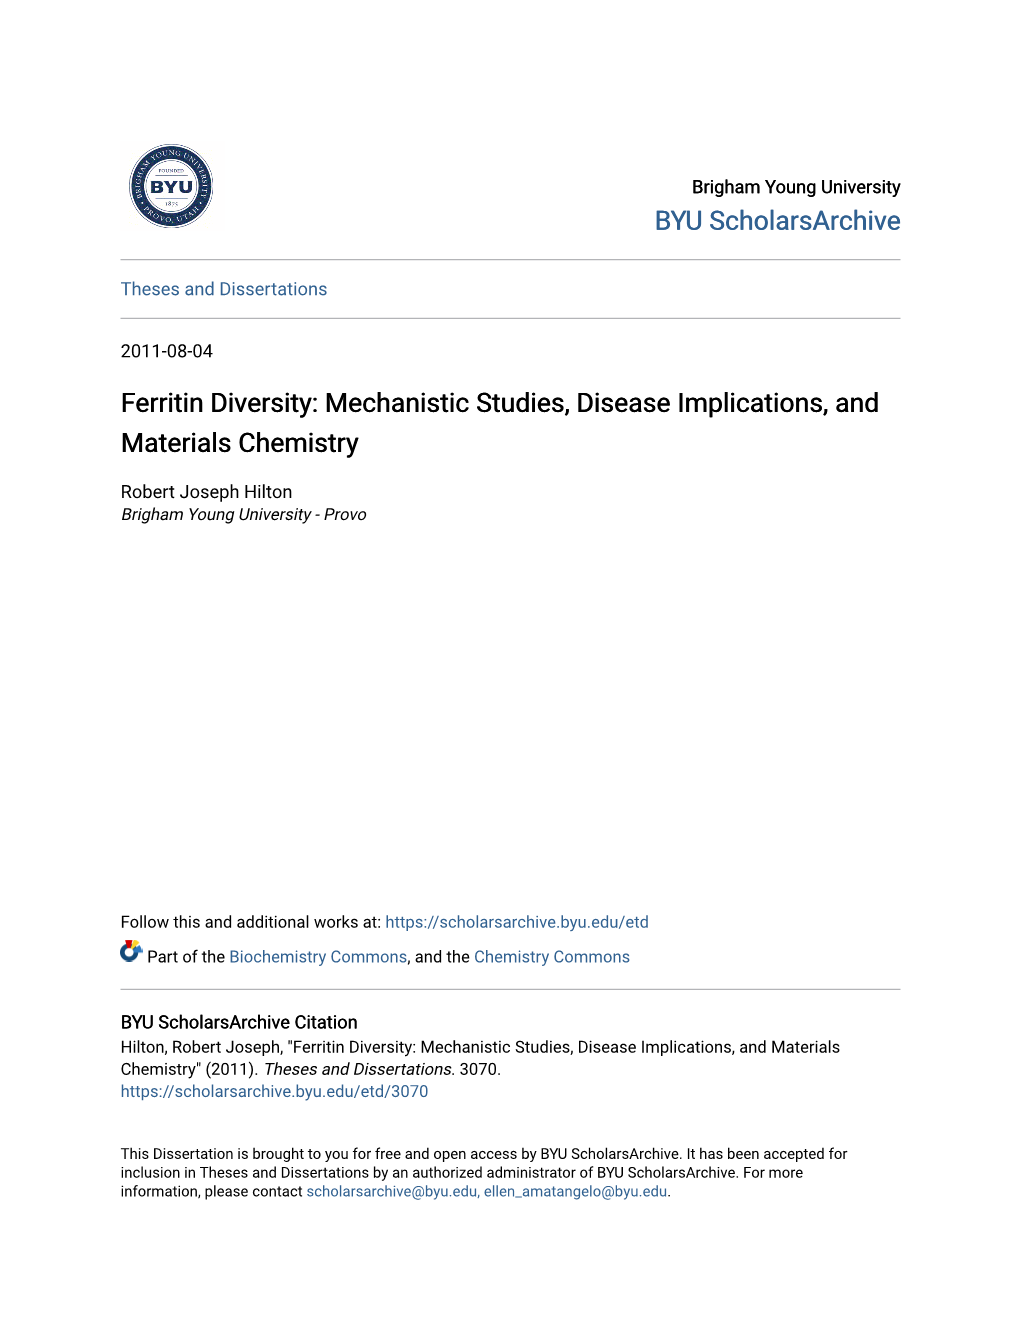 Ferritin Diversity: Mechanistic Studies, Disease Implications, and Materials Chemistry